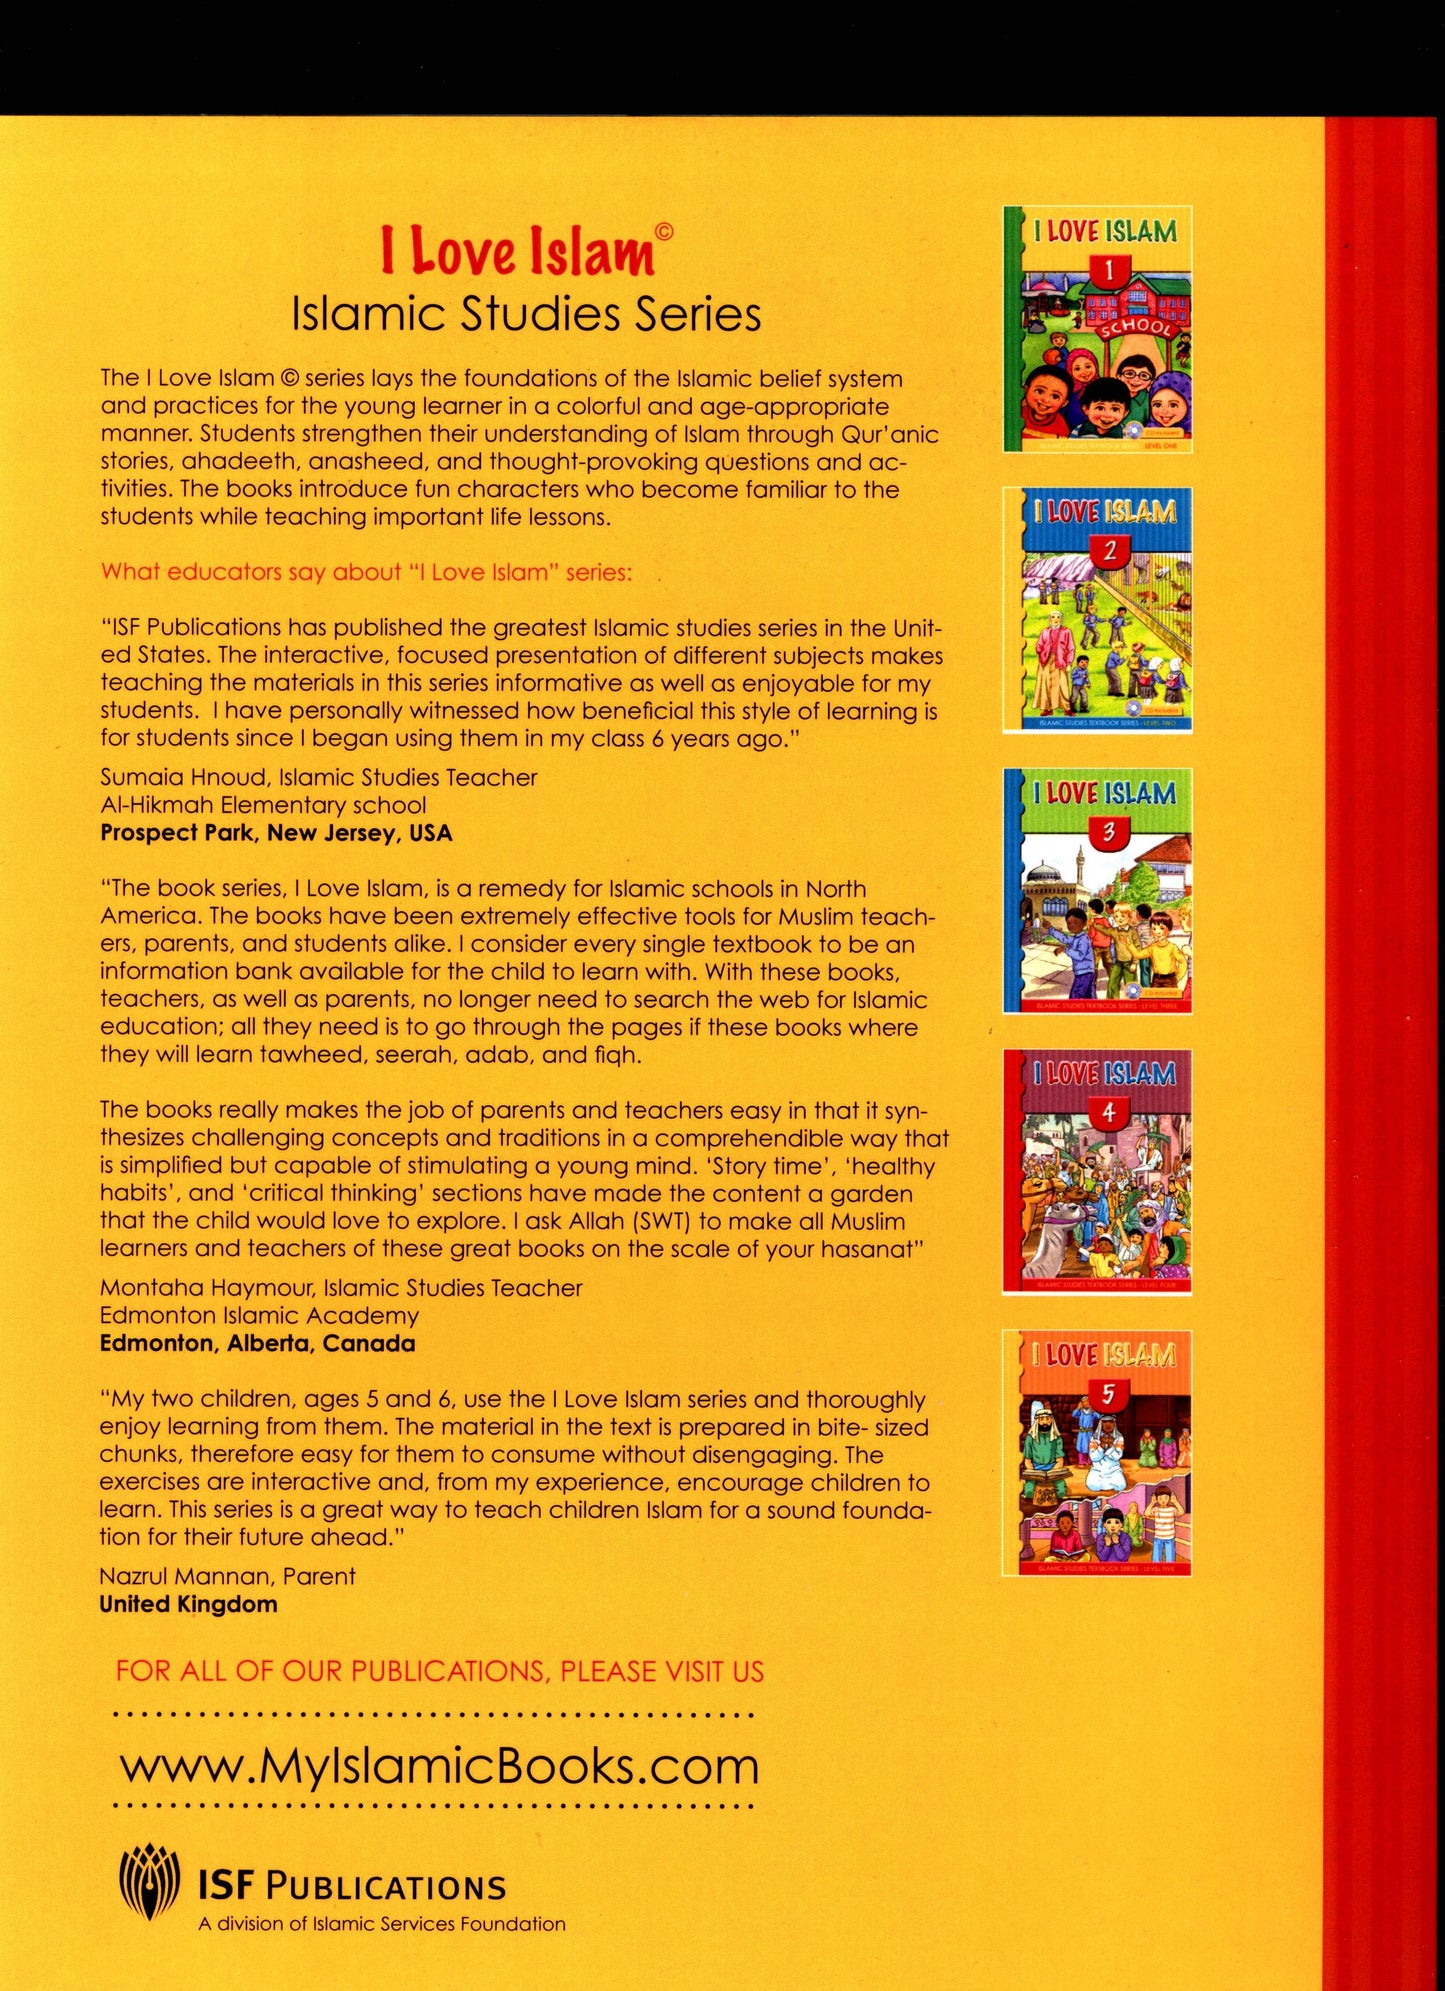 I Love Islam Teacher Book Level 4 ( 4th Grade )